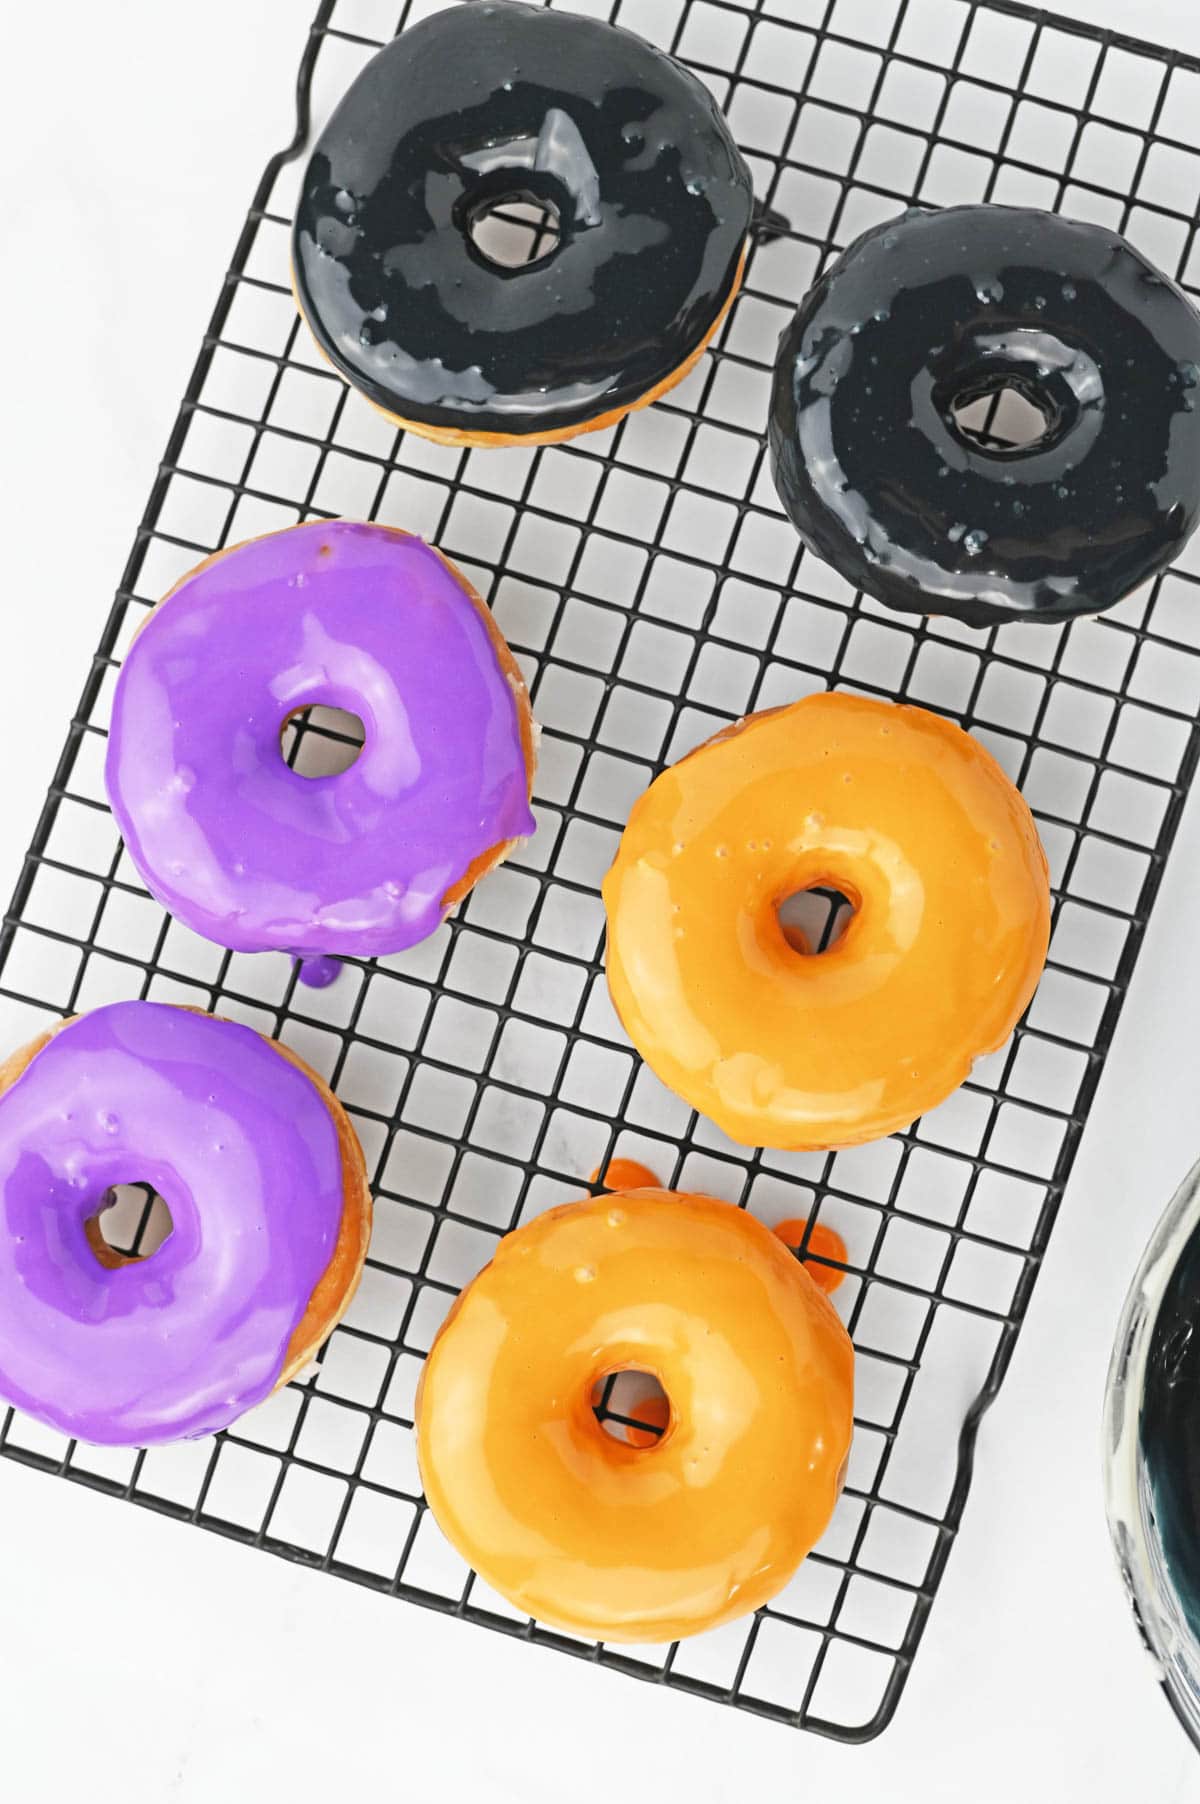 Donuts dipped in orange, purple and black glaze